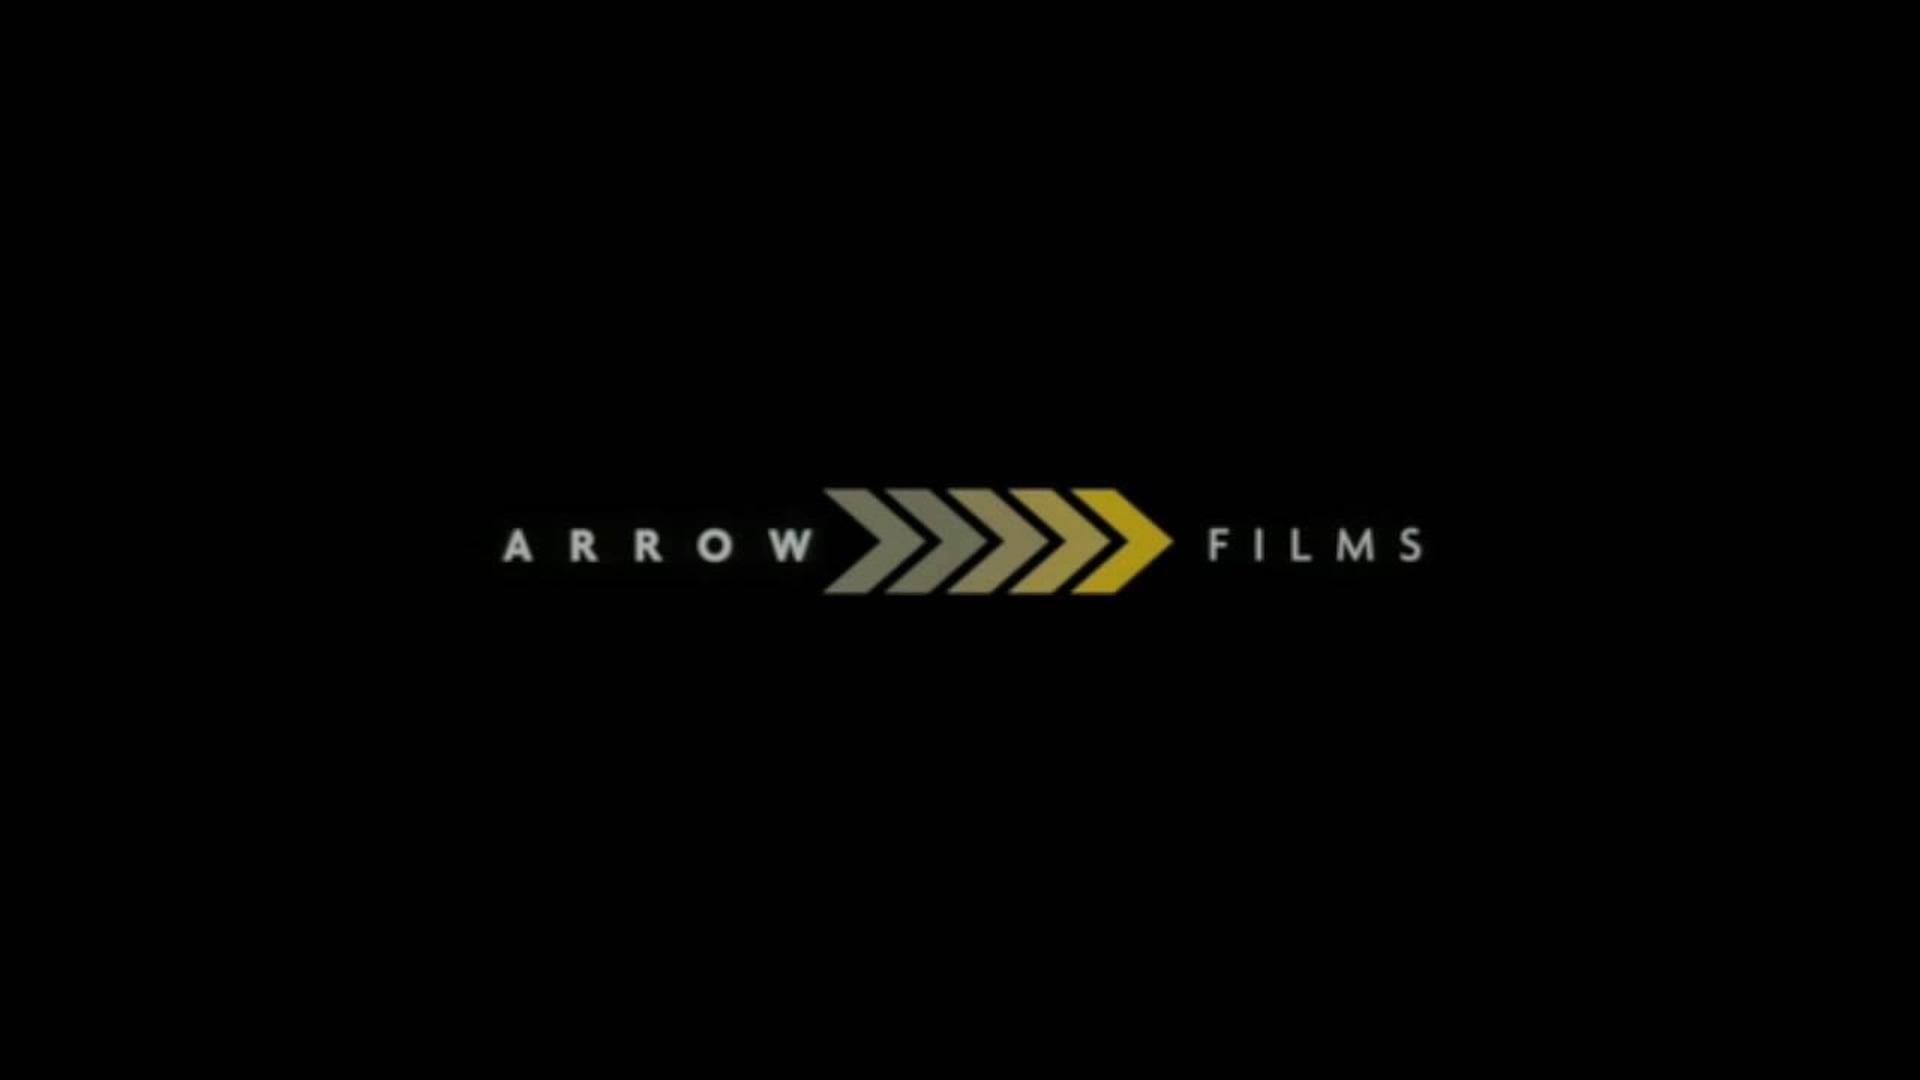 ARROW FILMS: THE STYLIST TRAILER